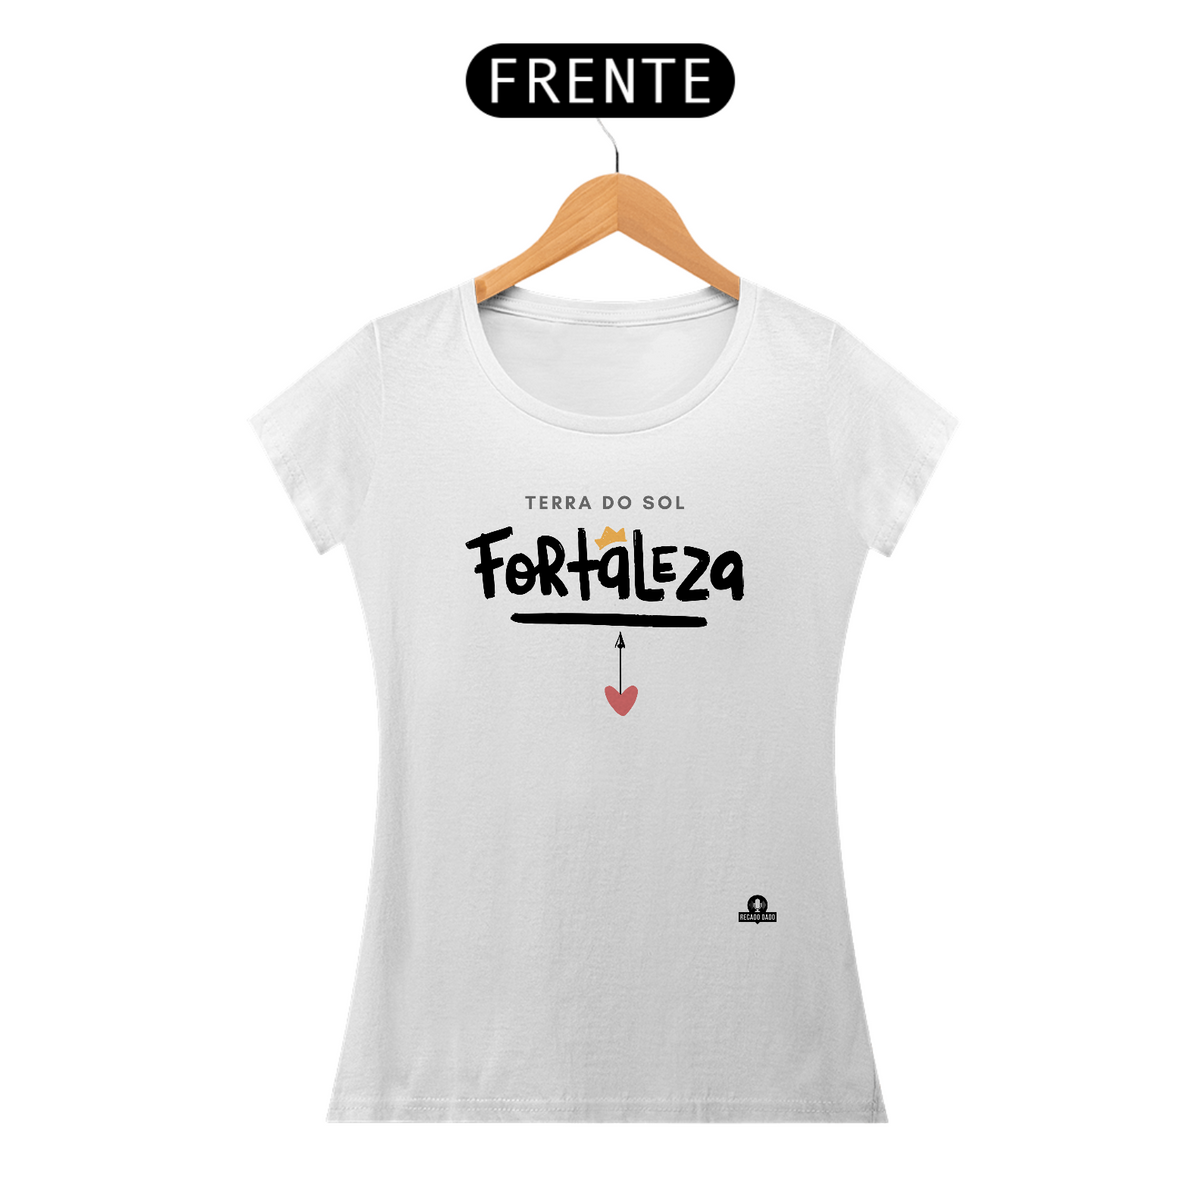 Nome do produto: Camiseta feminina de turismo da linda cidade de Fortaleza - CE, conhecida como a \